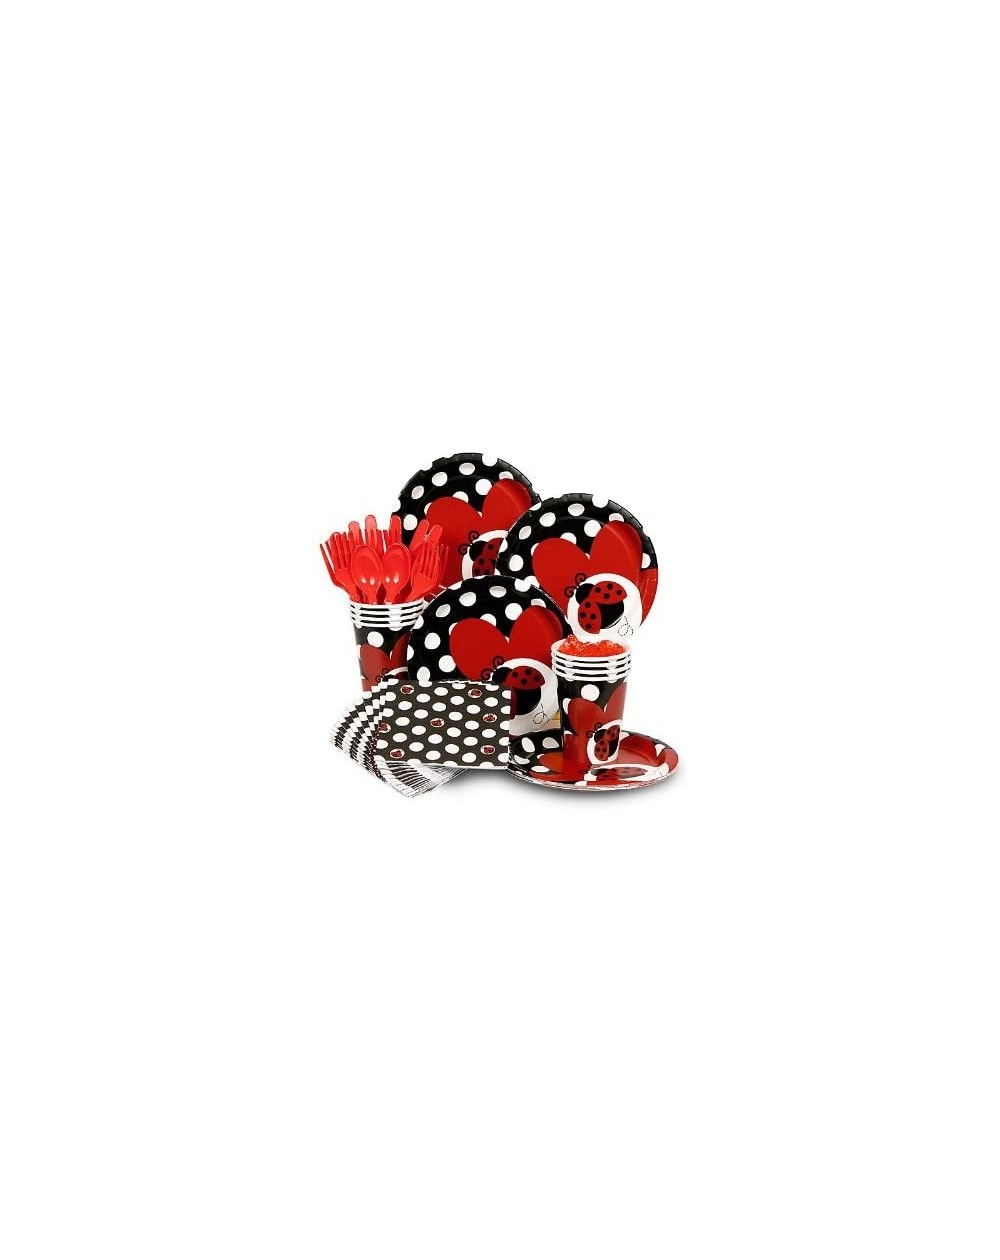 Party Packs Ladybug Party Standard Kit Serves 8 Guests - CG1102K3Q8X $13.92